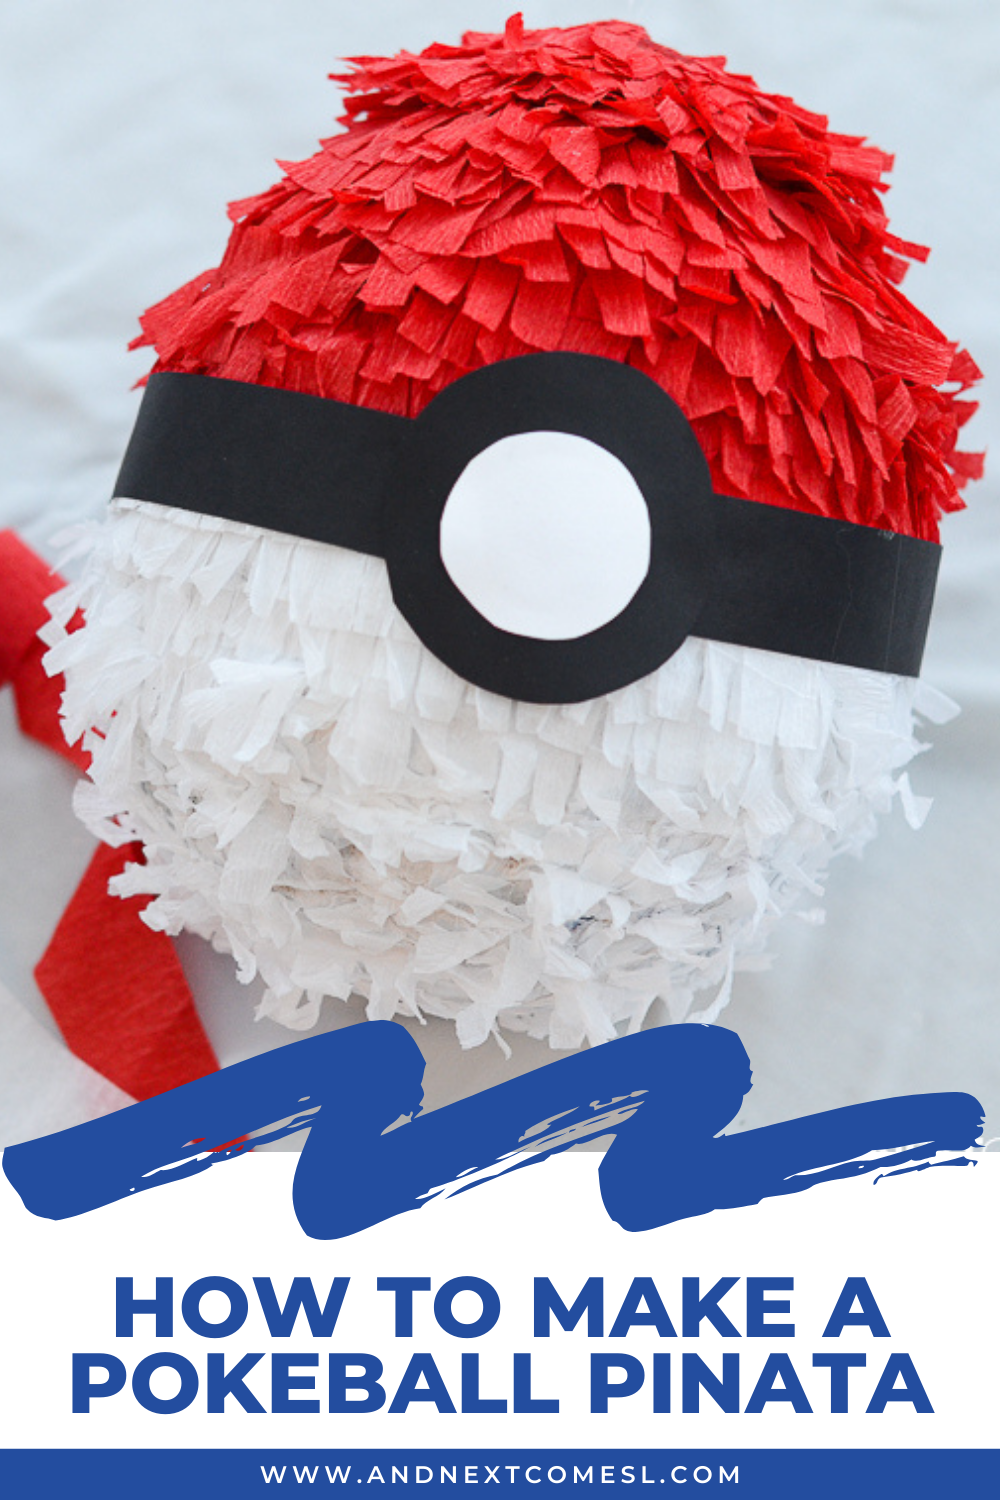 Looking for Pokemon pinata ideas? Here's how to make a DIY pokeball pinata